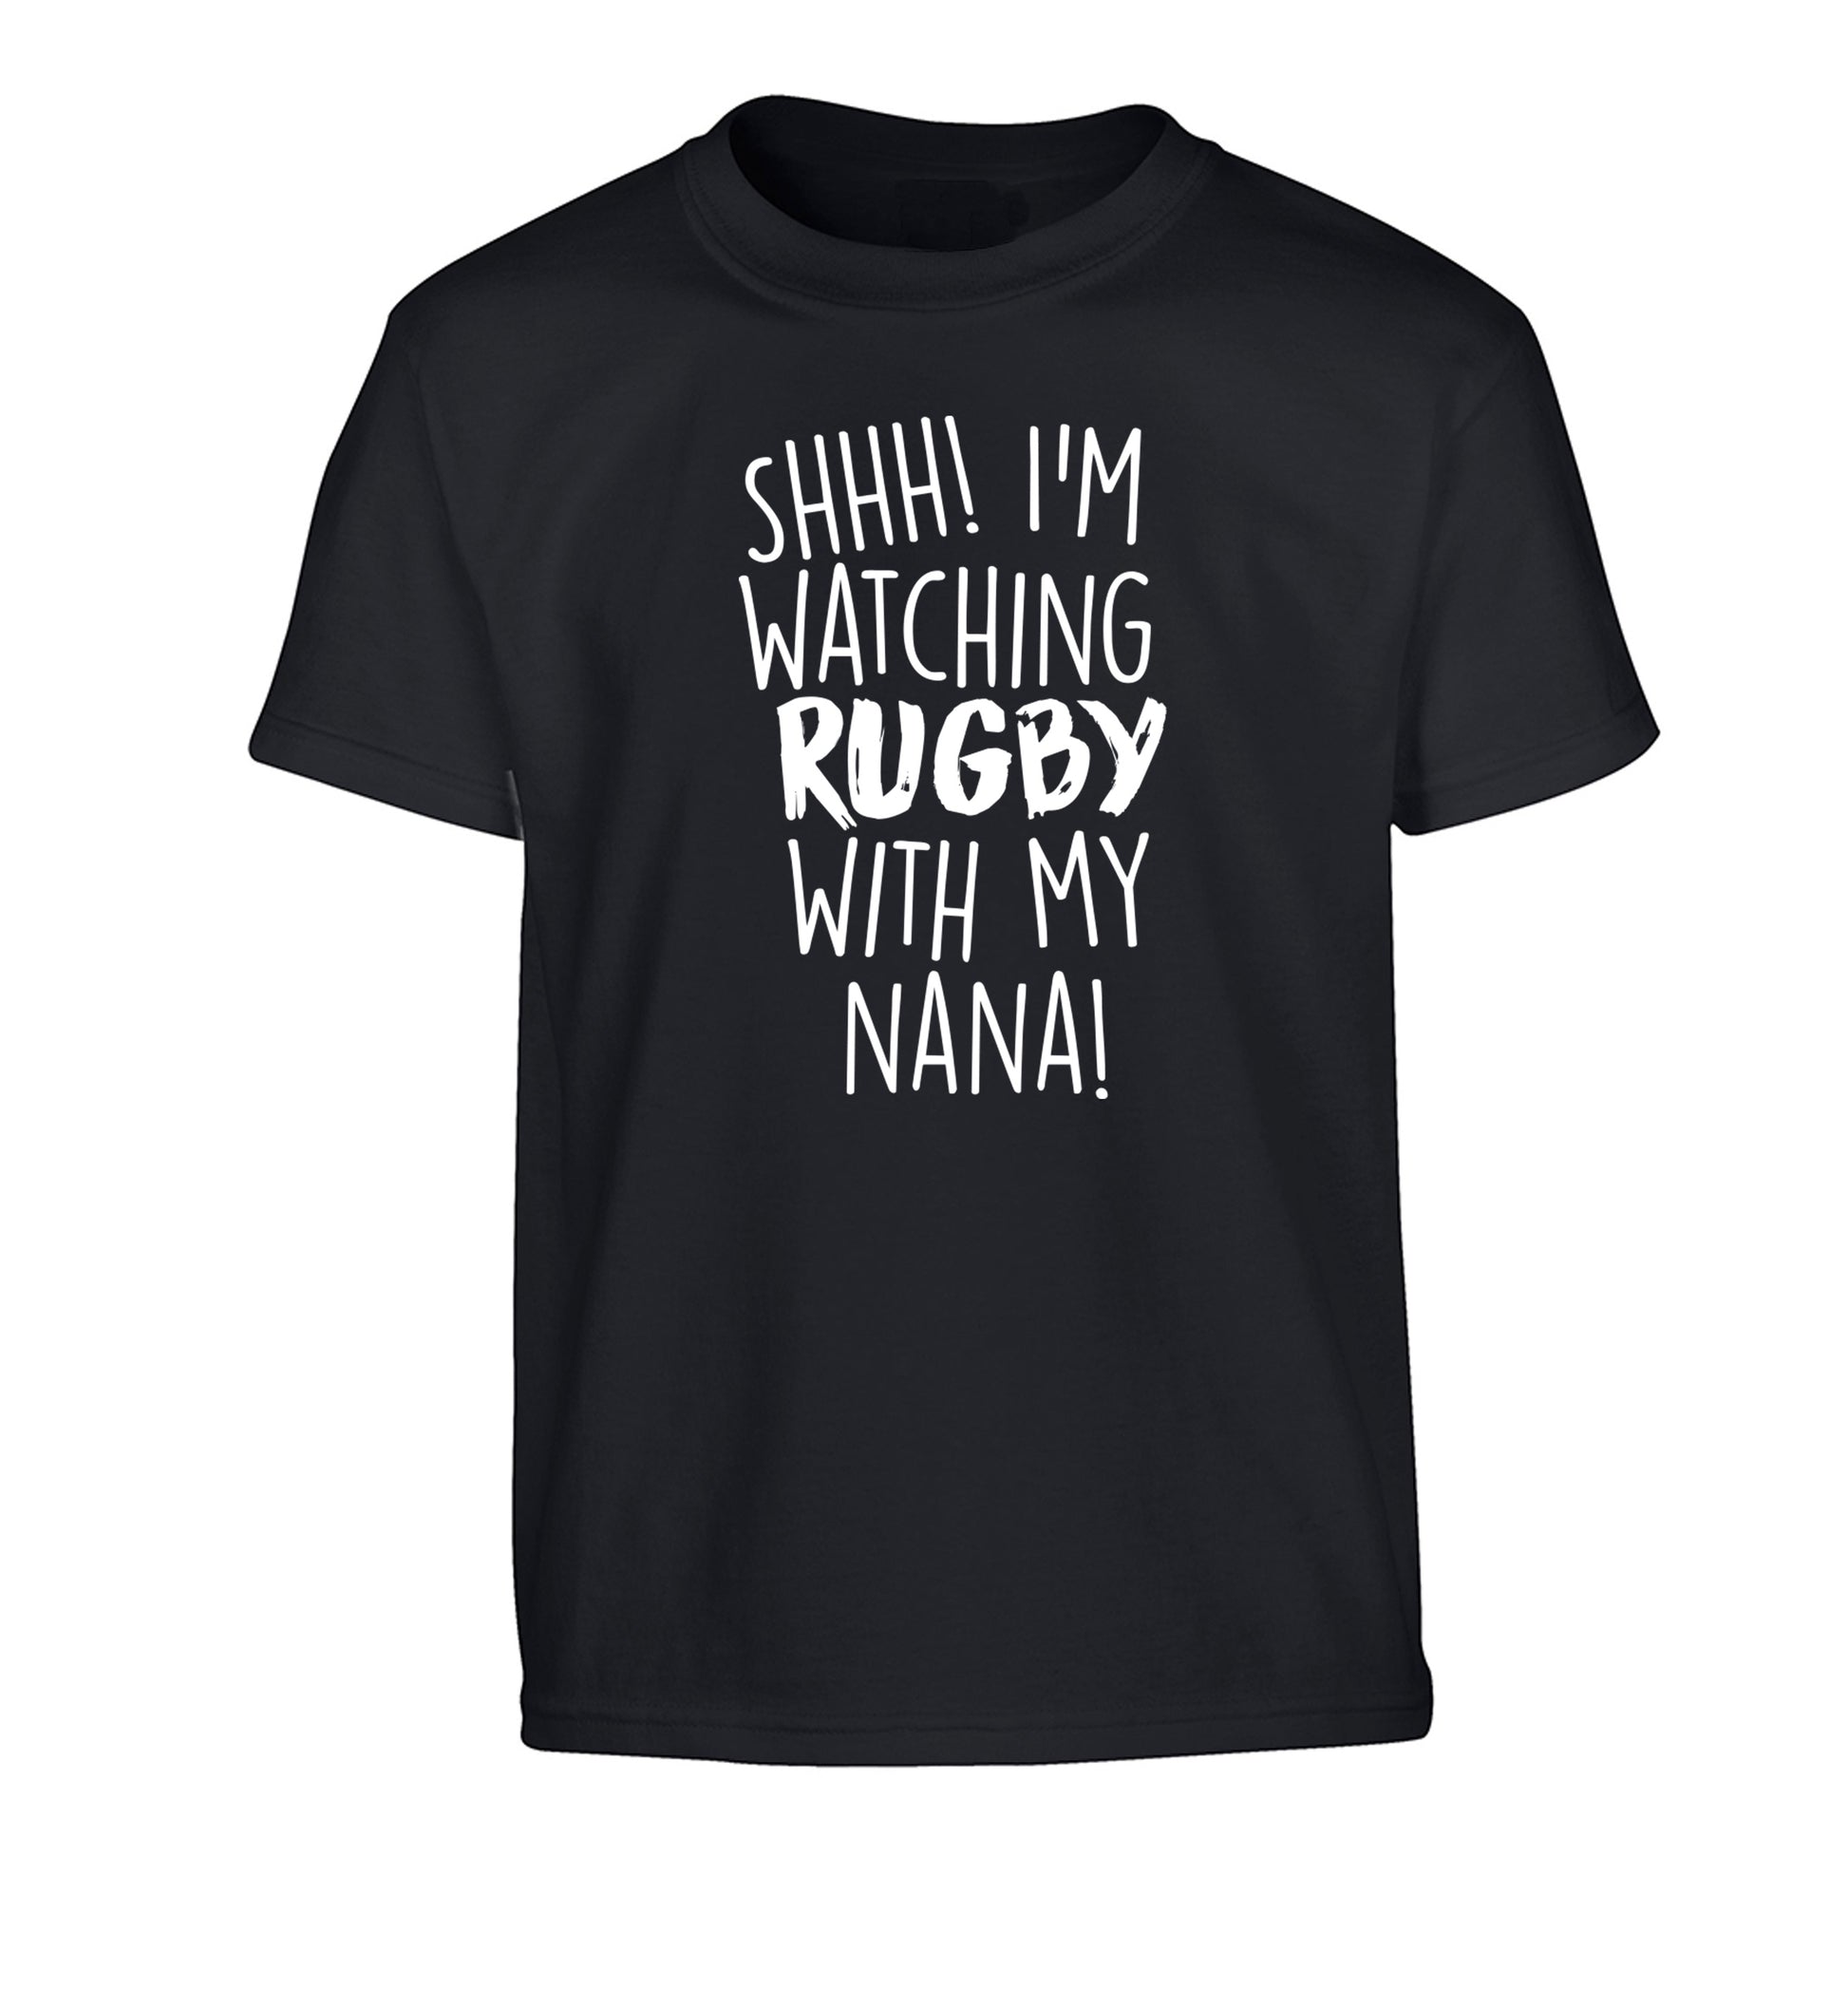 Shh I'm watching rugby with my nana Children's black Tshirt 12-13 Years